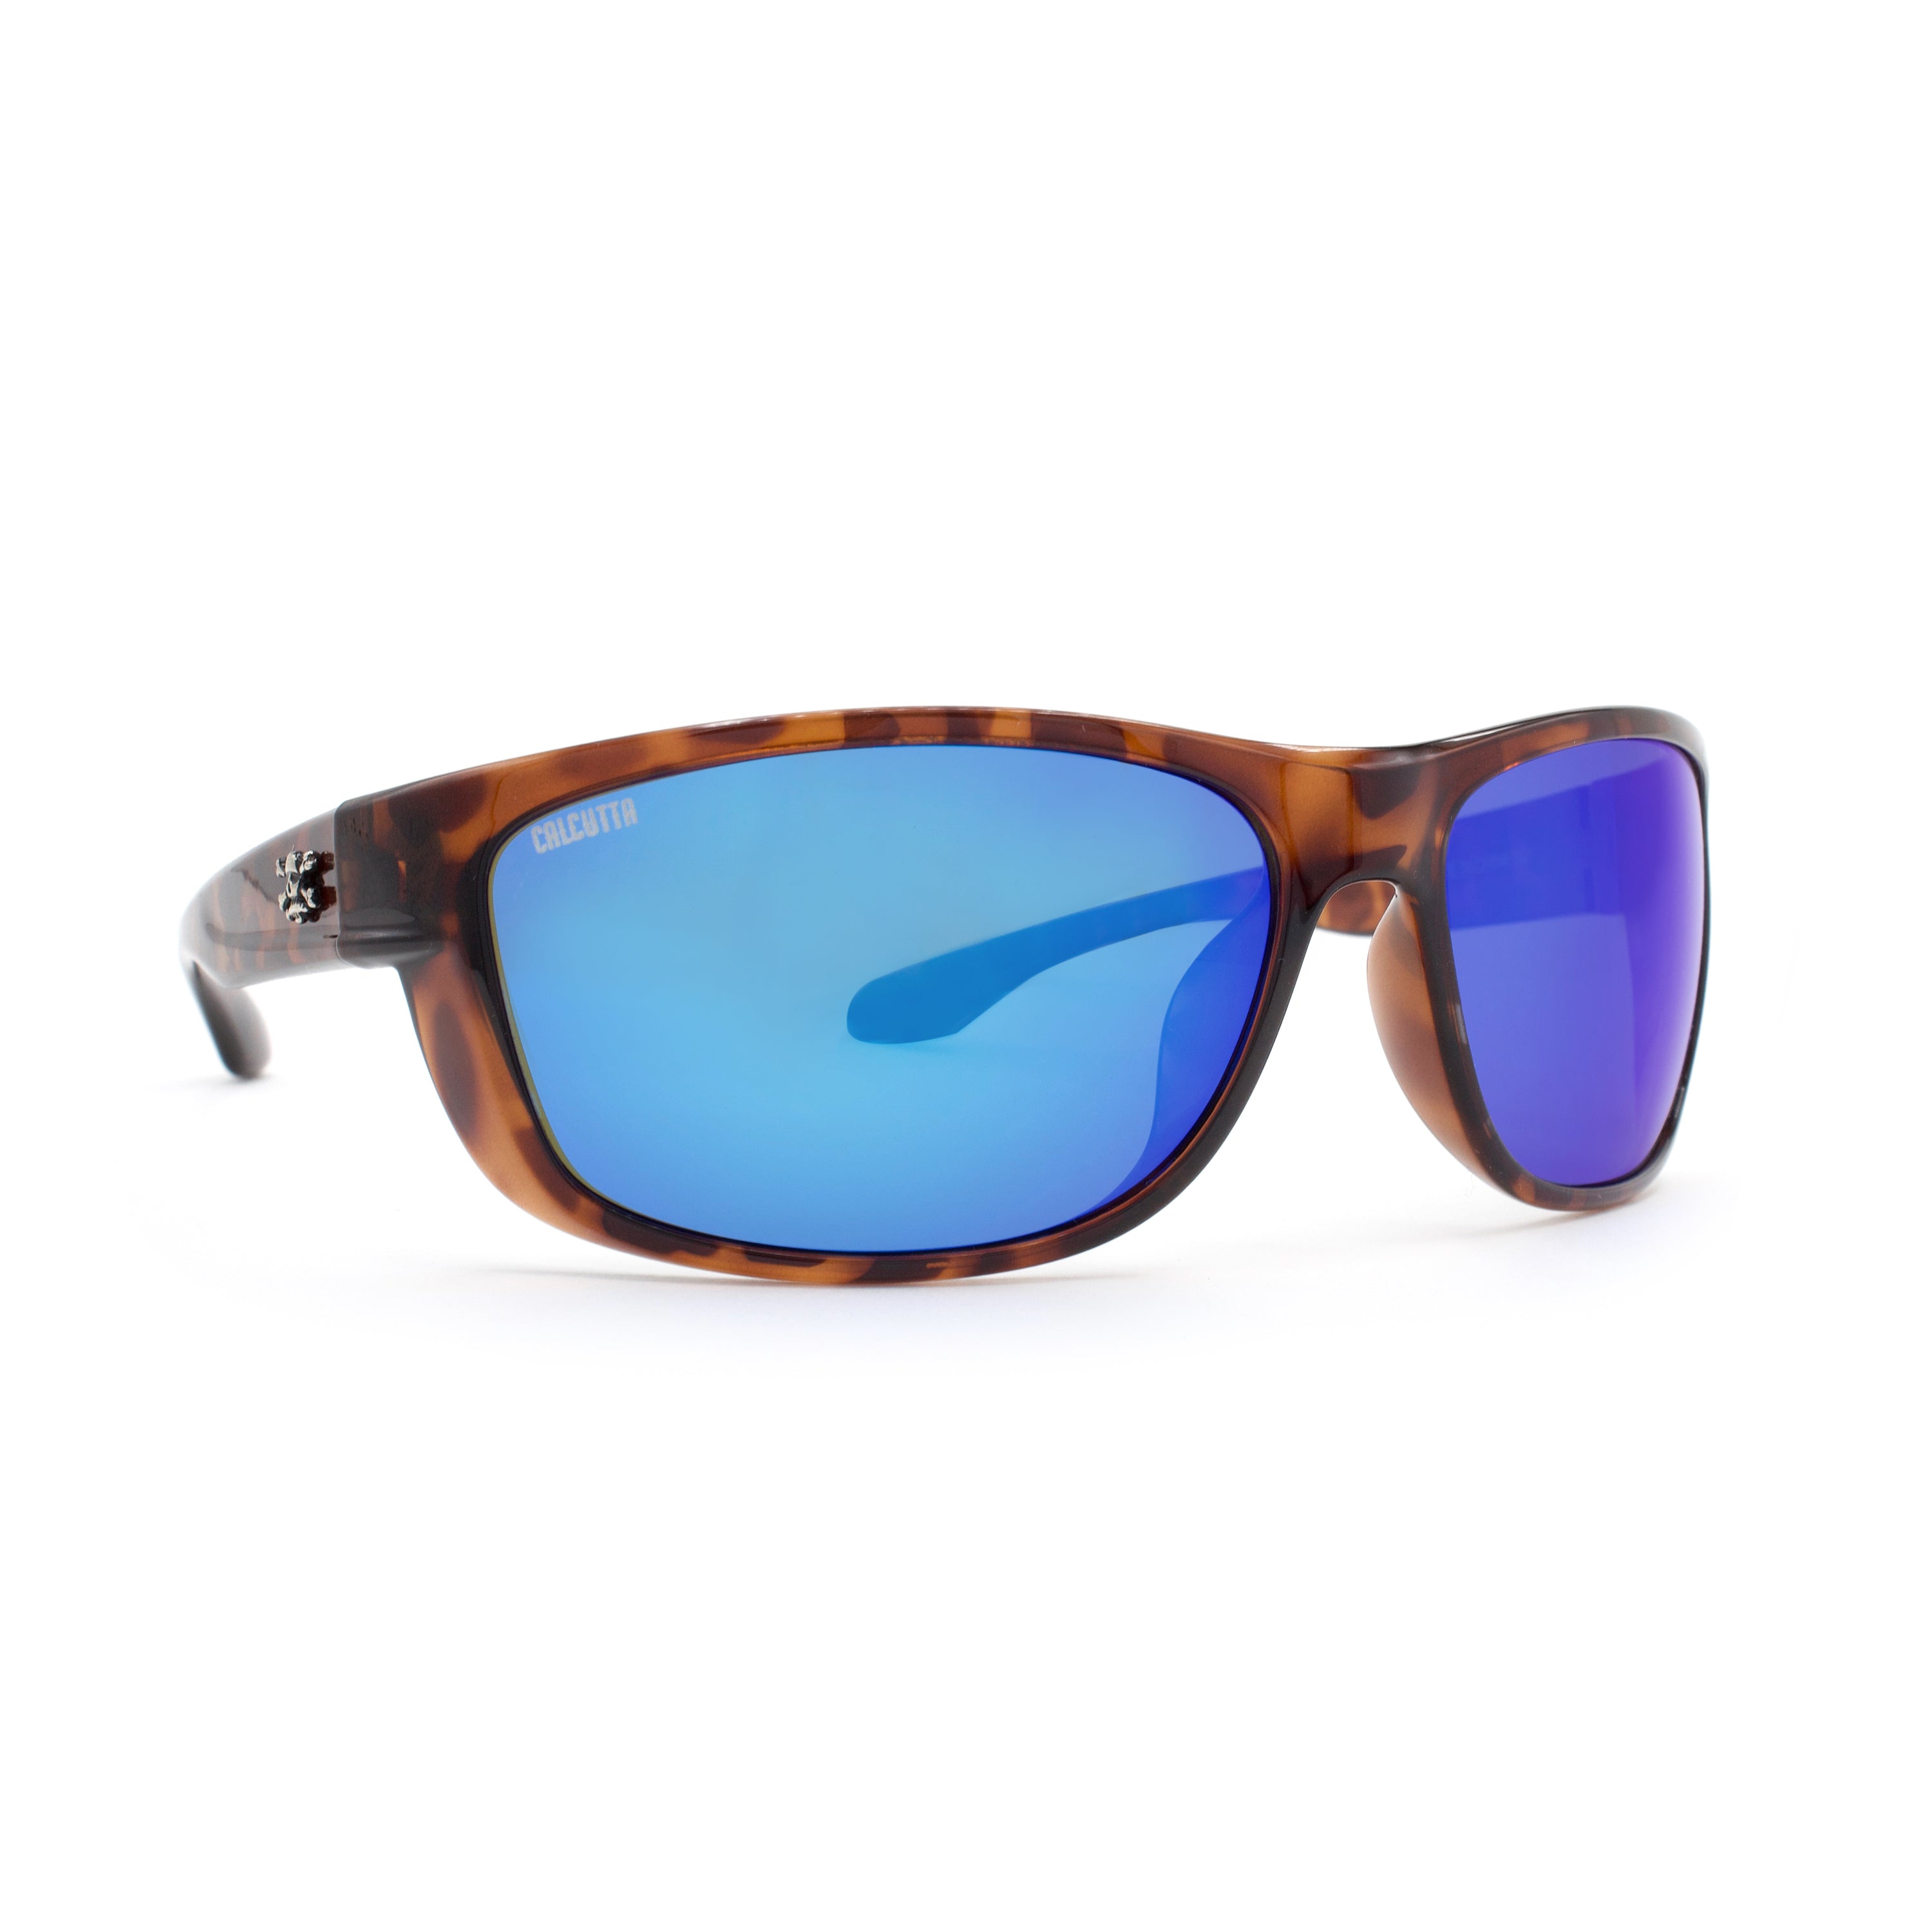 Calcutta Cross sunglasses tortoise frame blue mirror lens